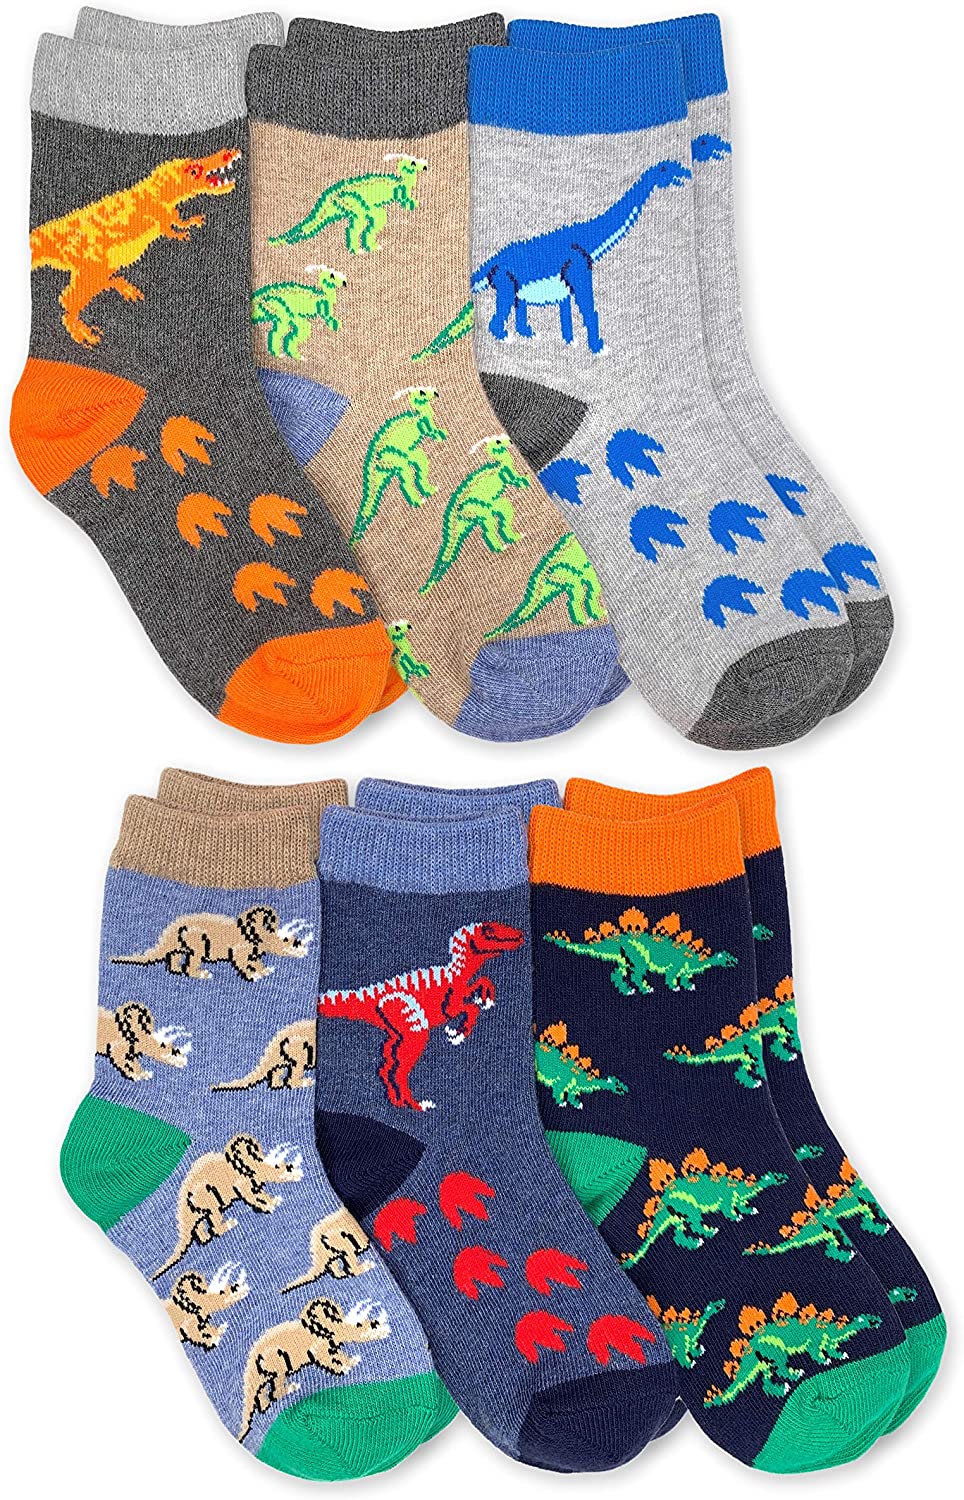 Jefferies Socks Boys Dinosaur Animal Pattern Cotton Crew Socks 9 Pair Pack